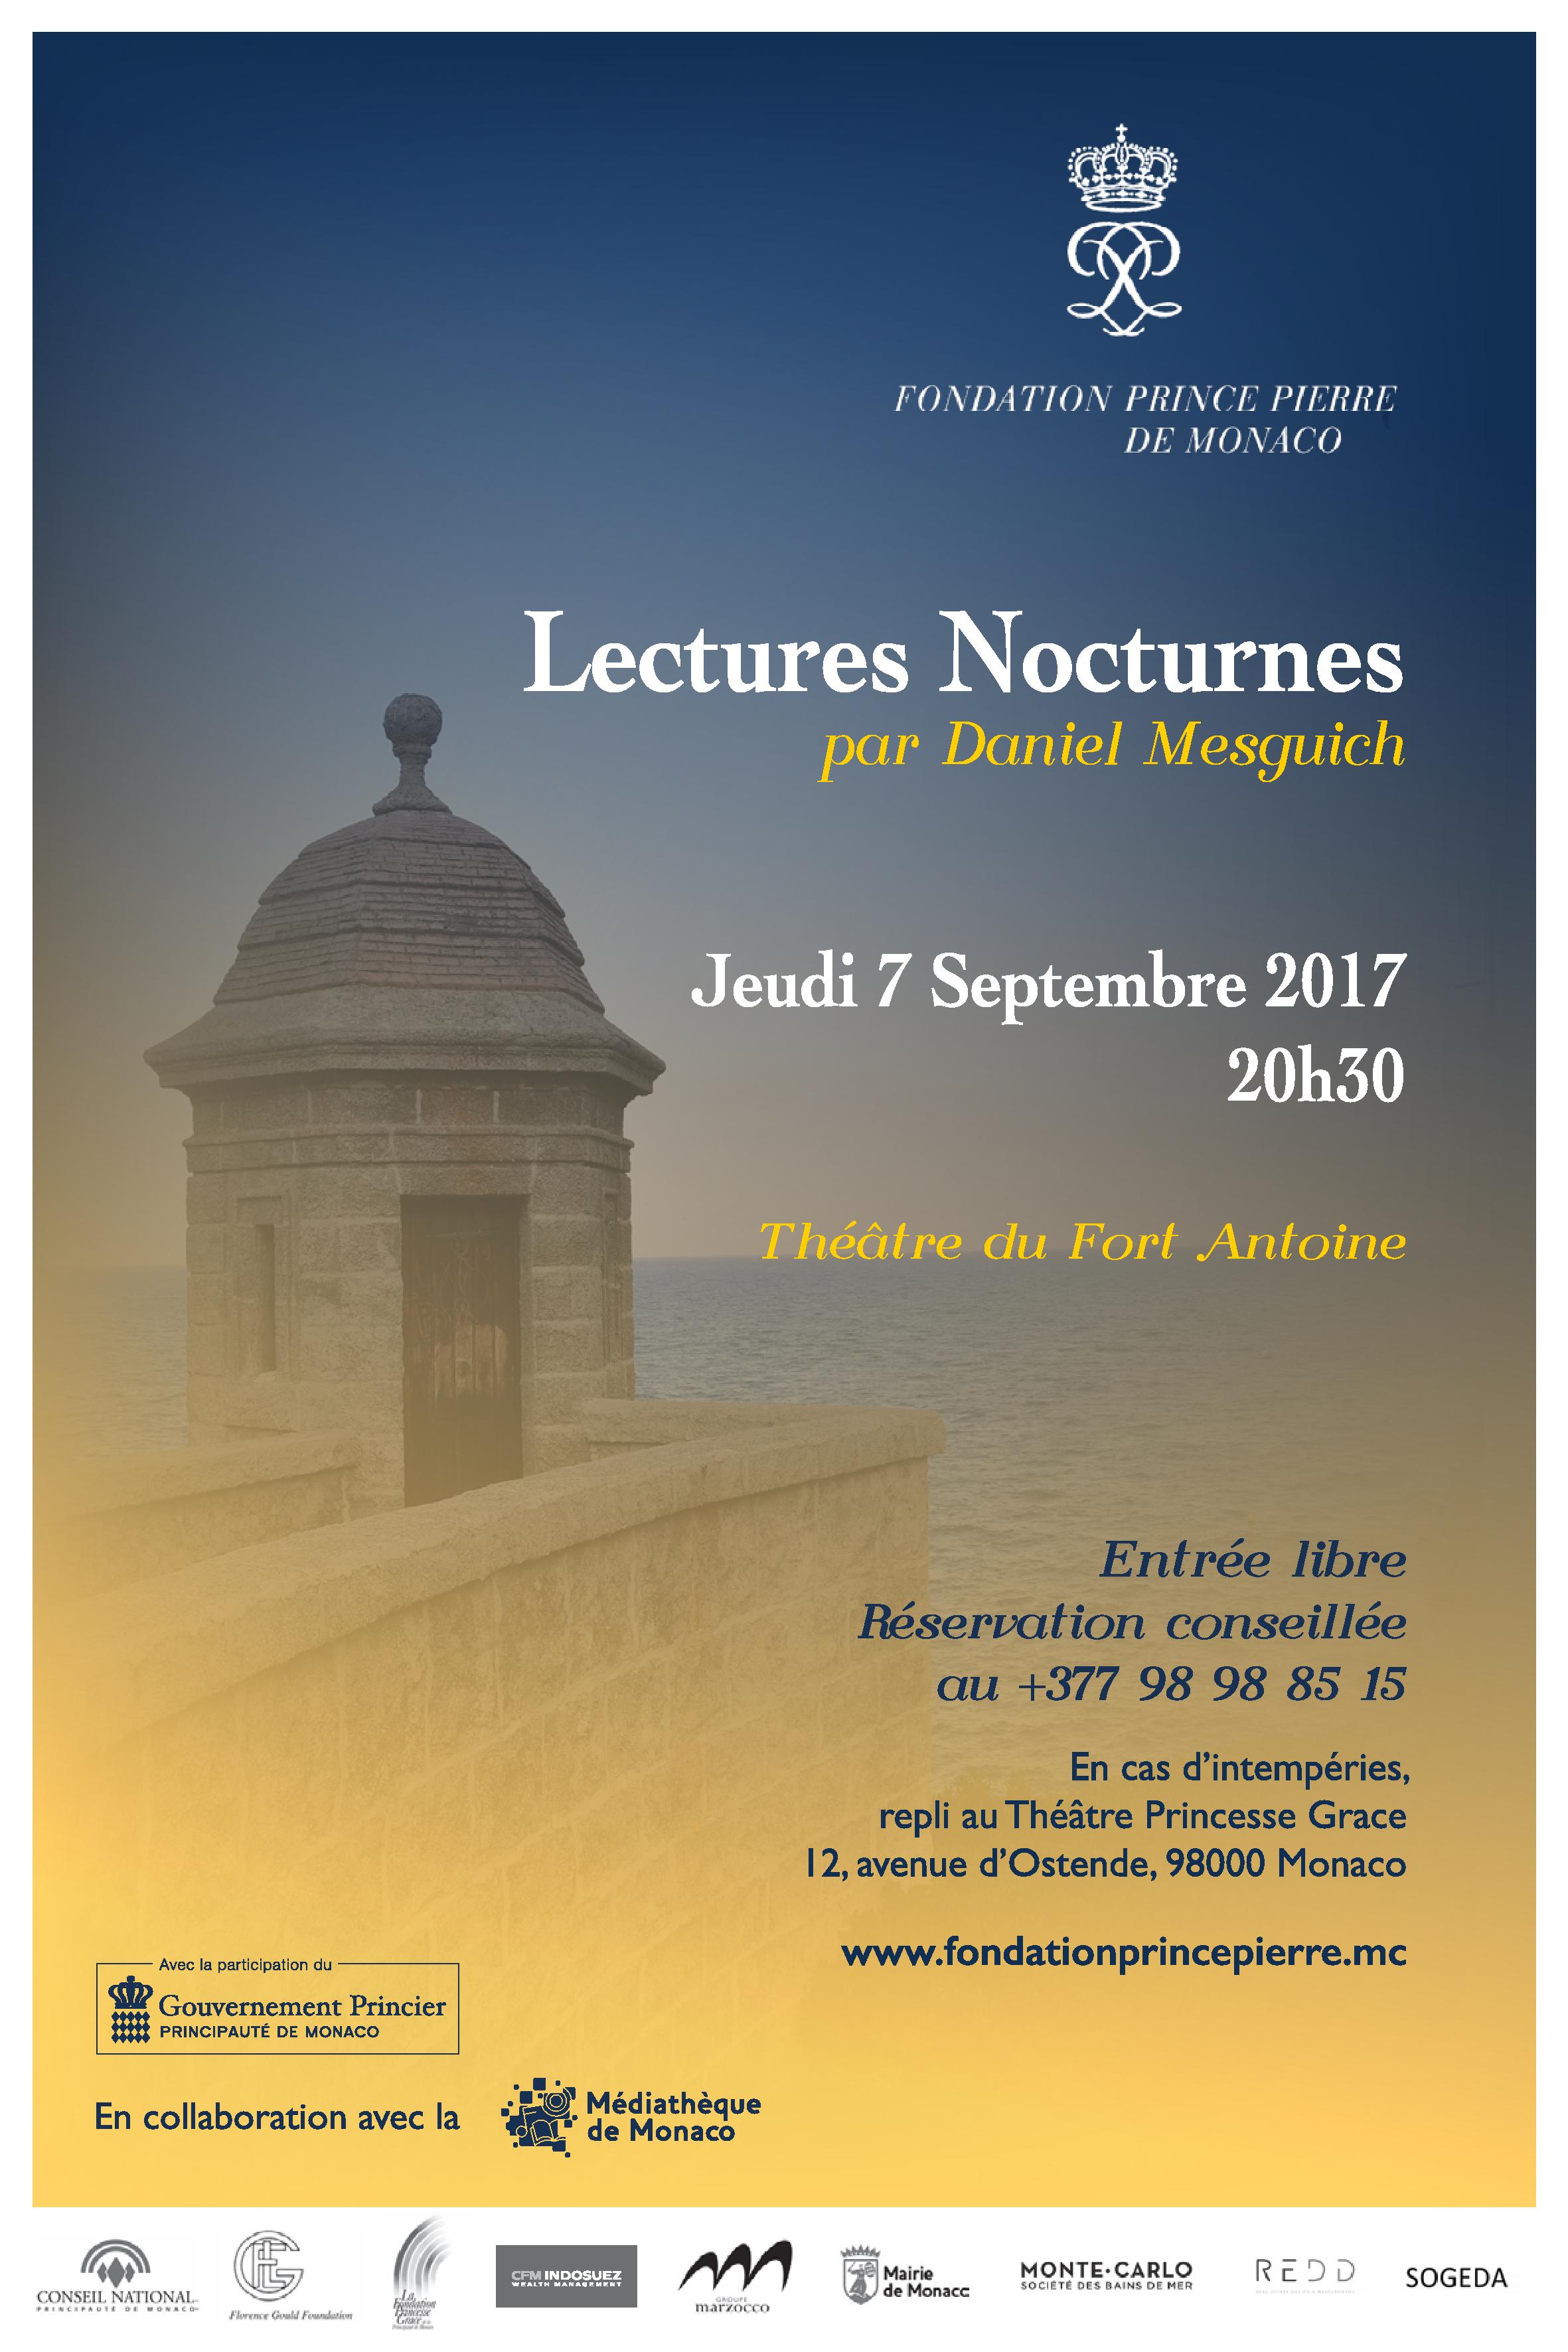 Lectures nocturnes au Fort Antoine